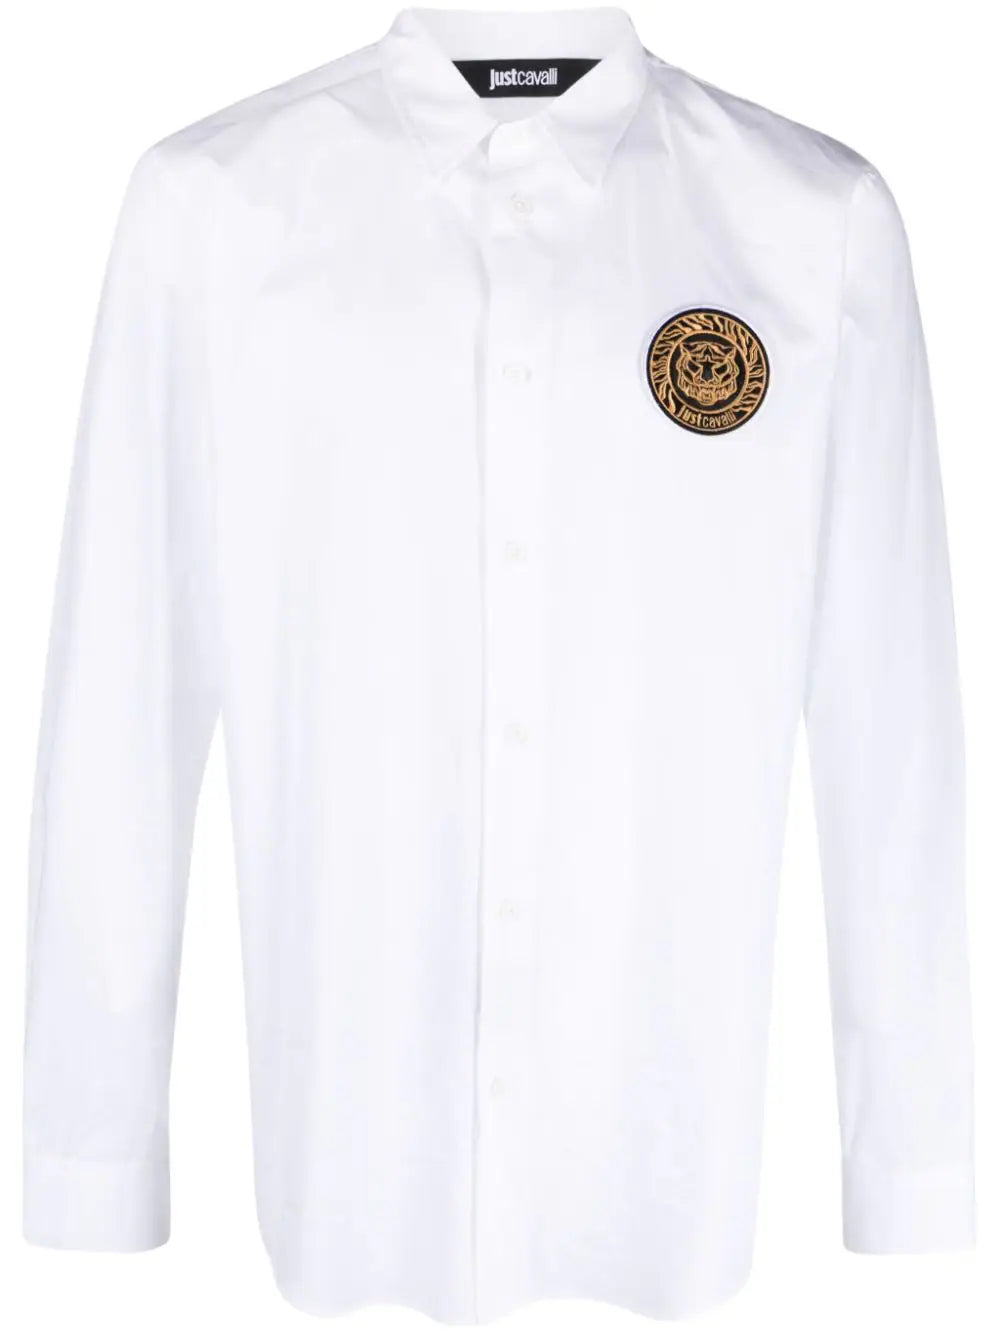 Just Cavalli 75Oalys4 Cn500 S T-Round Shirt White